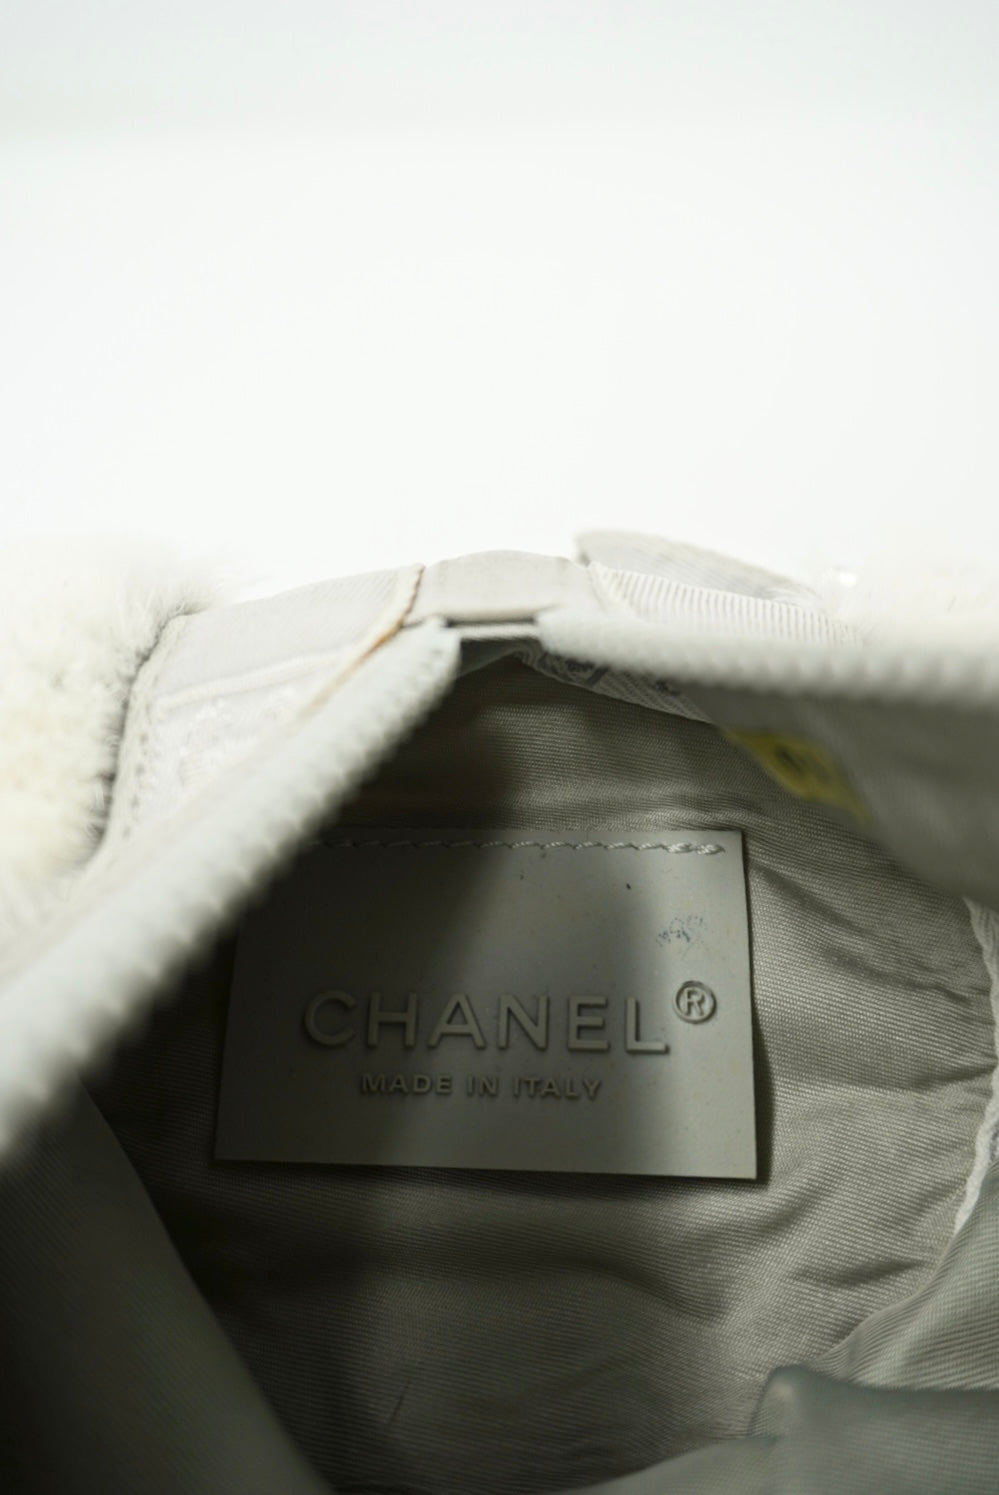 Tote Chanel Black in Fur - 29732262